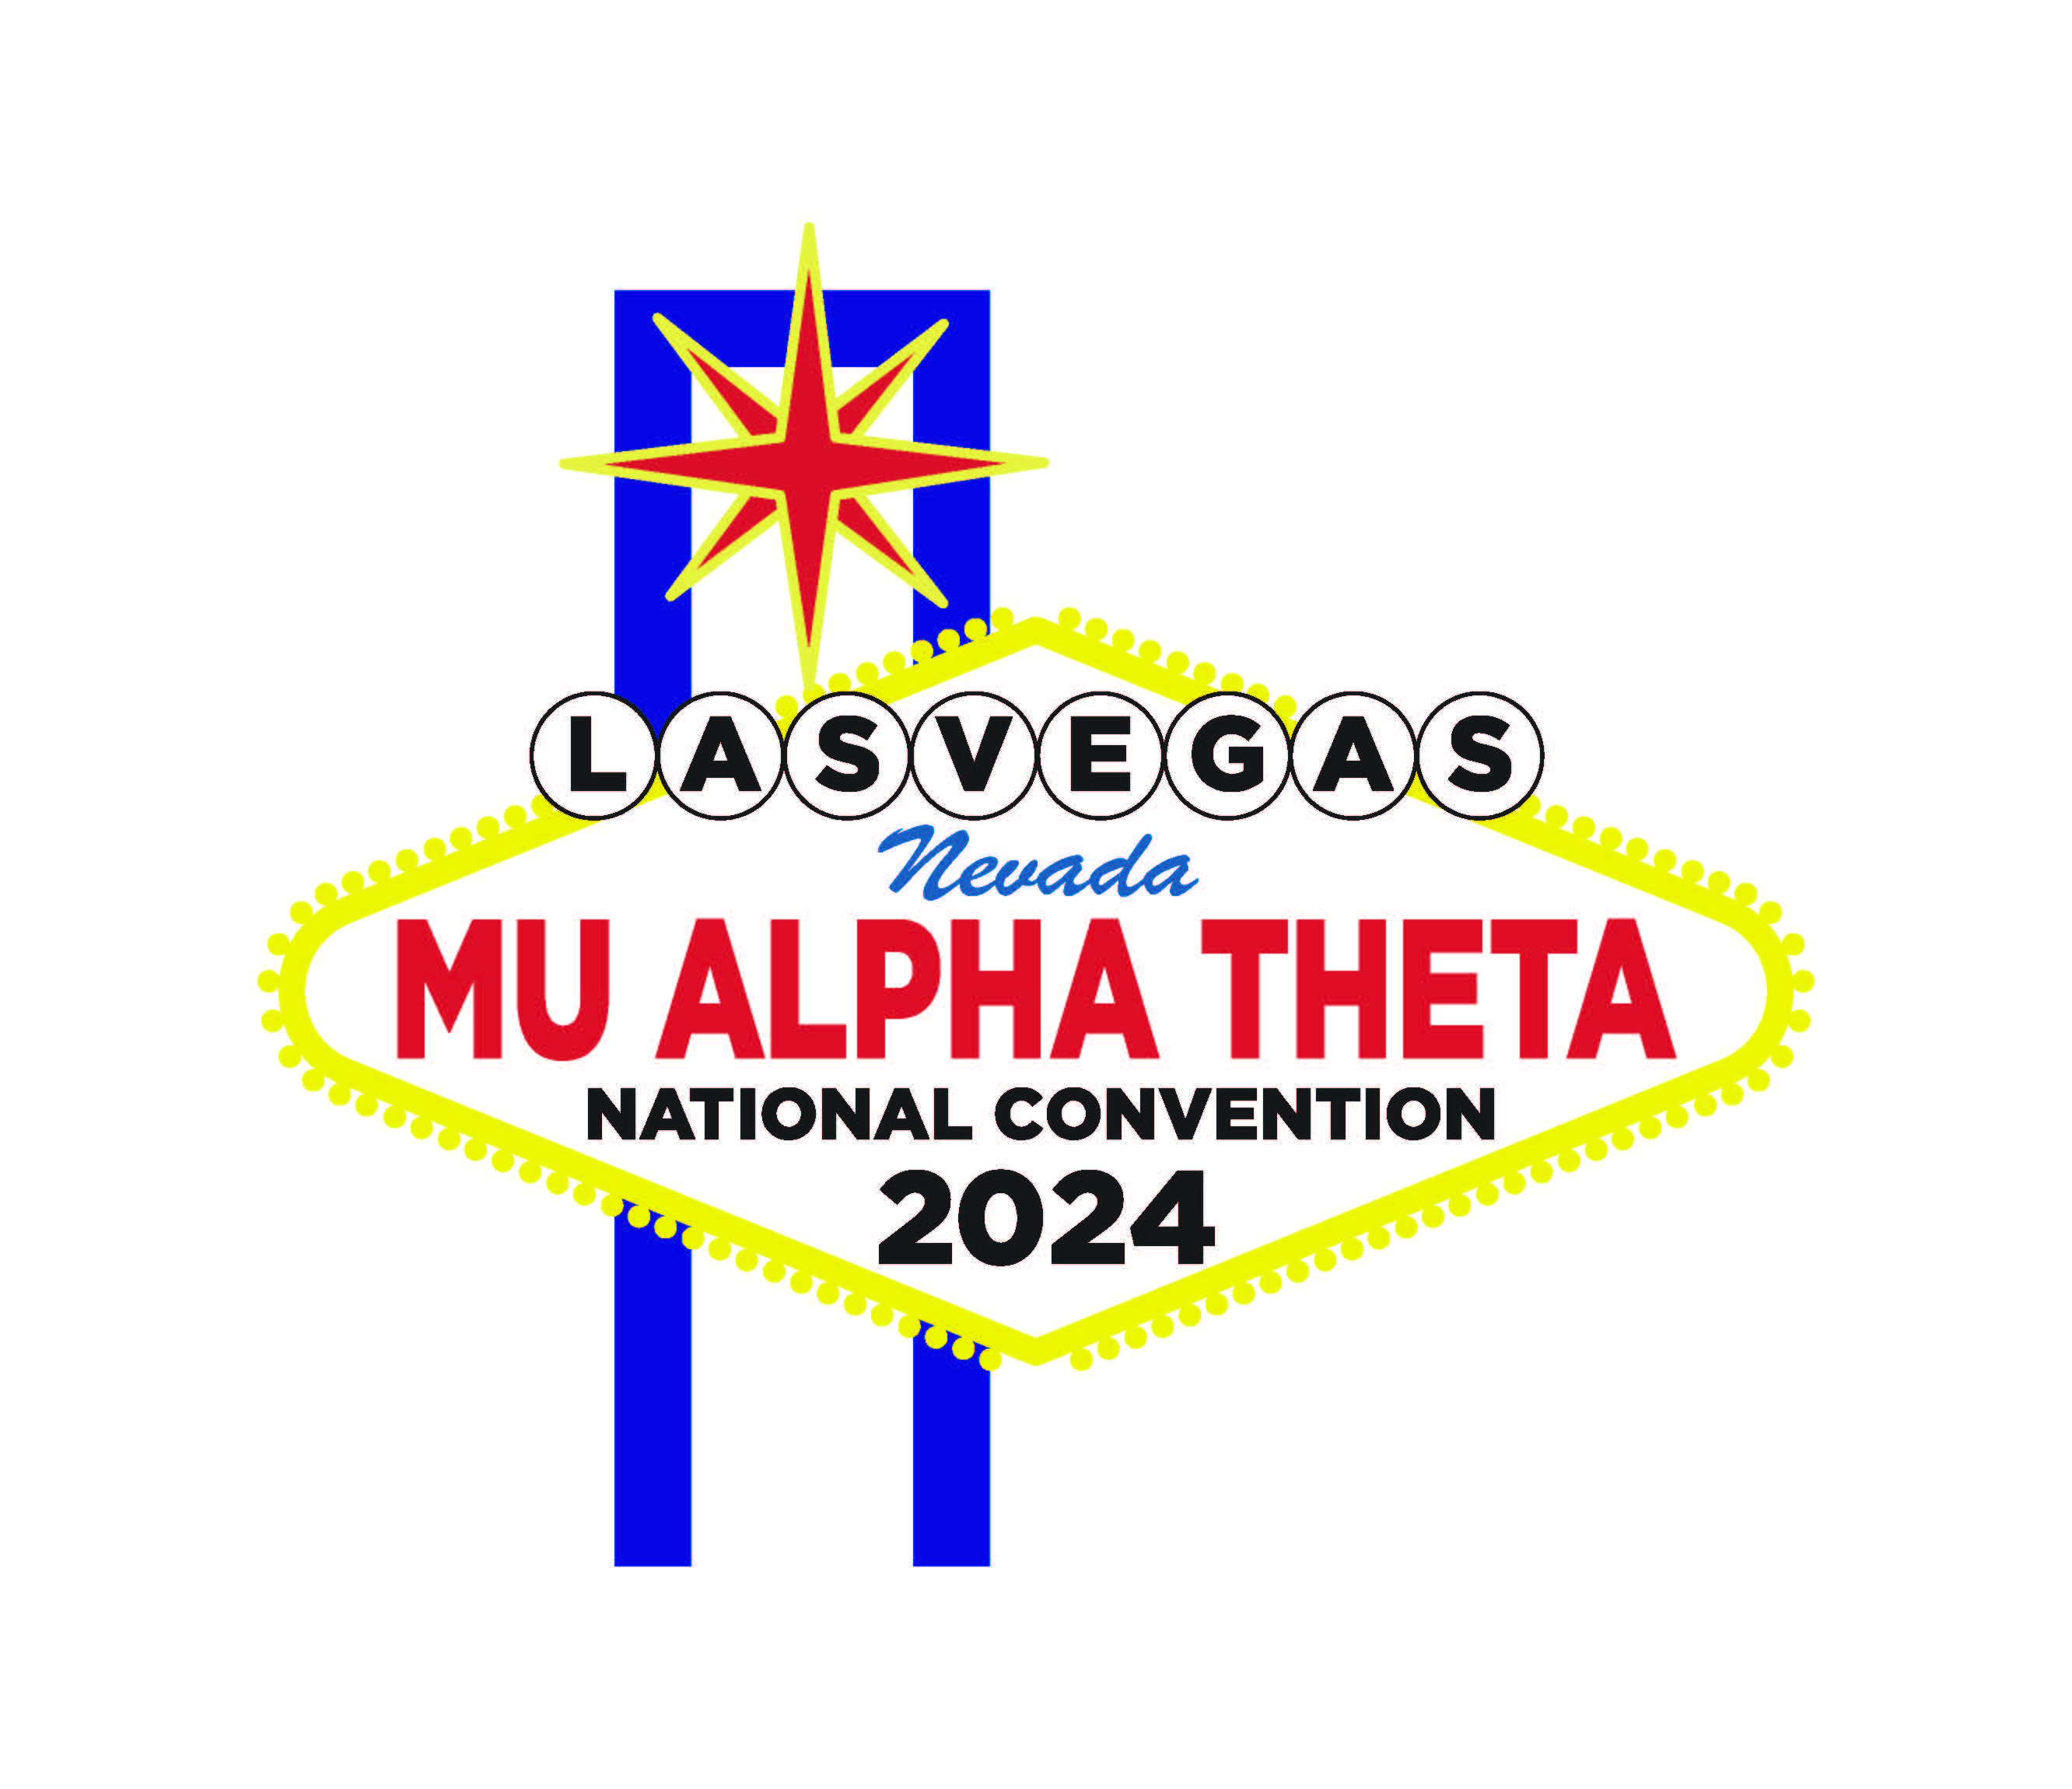 National Convention | Mu Alpha Theta